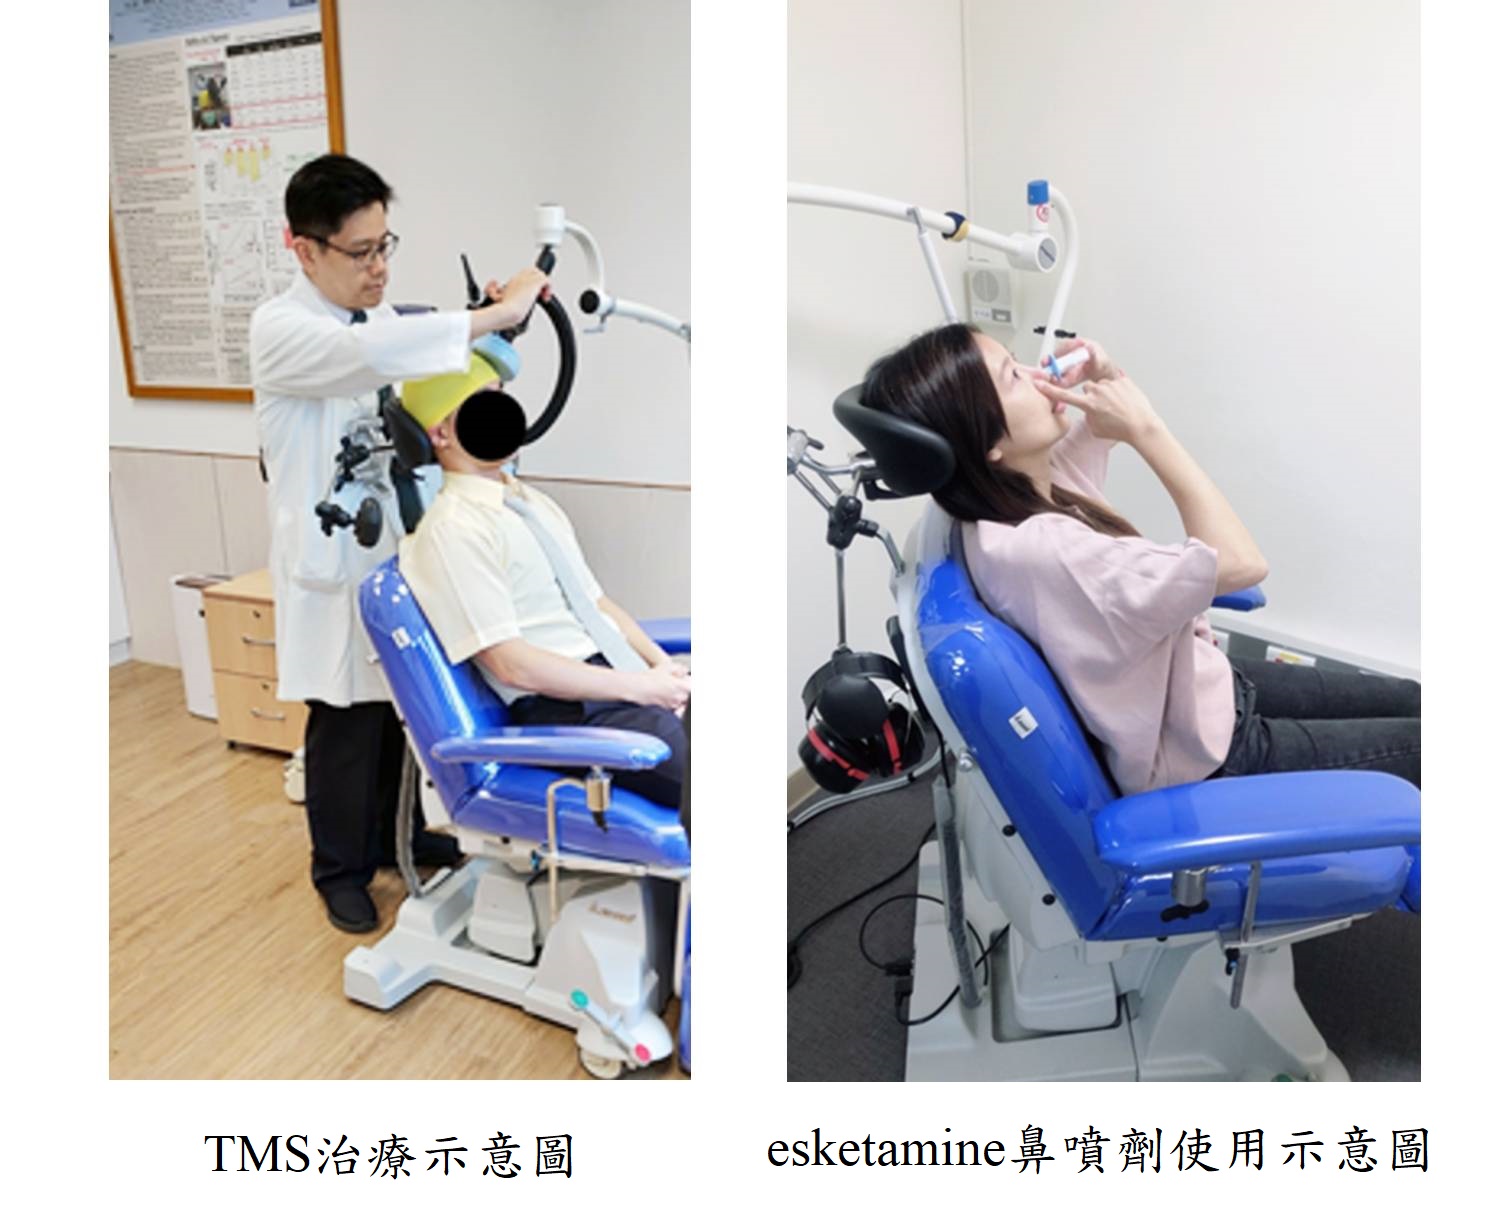 TMS治療示意圖及esketamine鼻噴劑使用示意圖